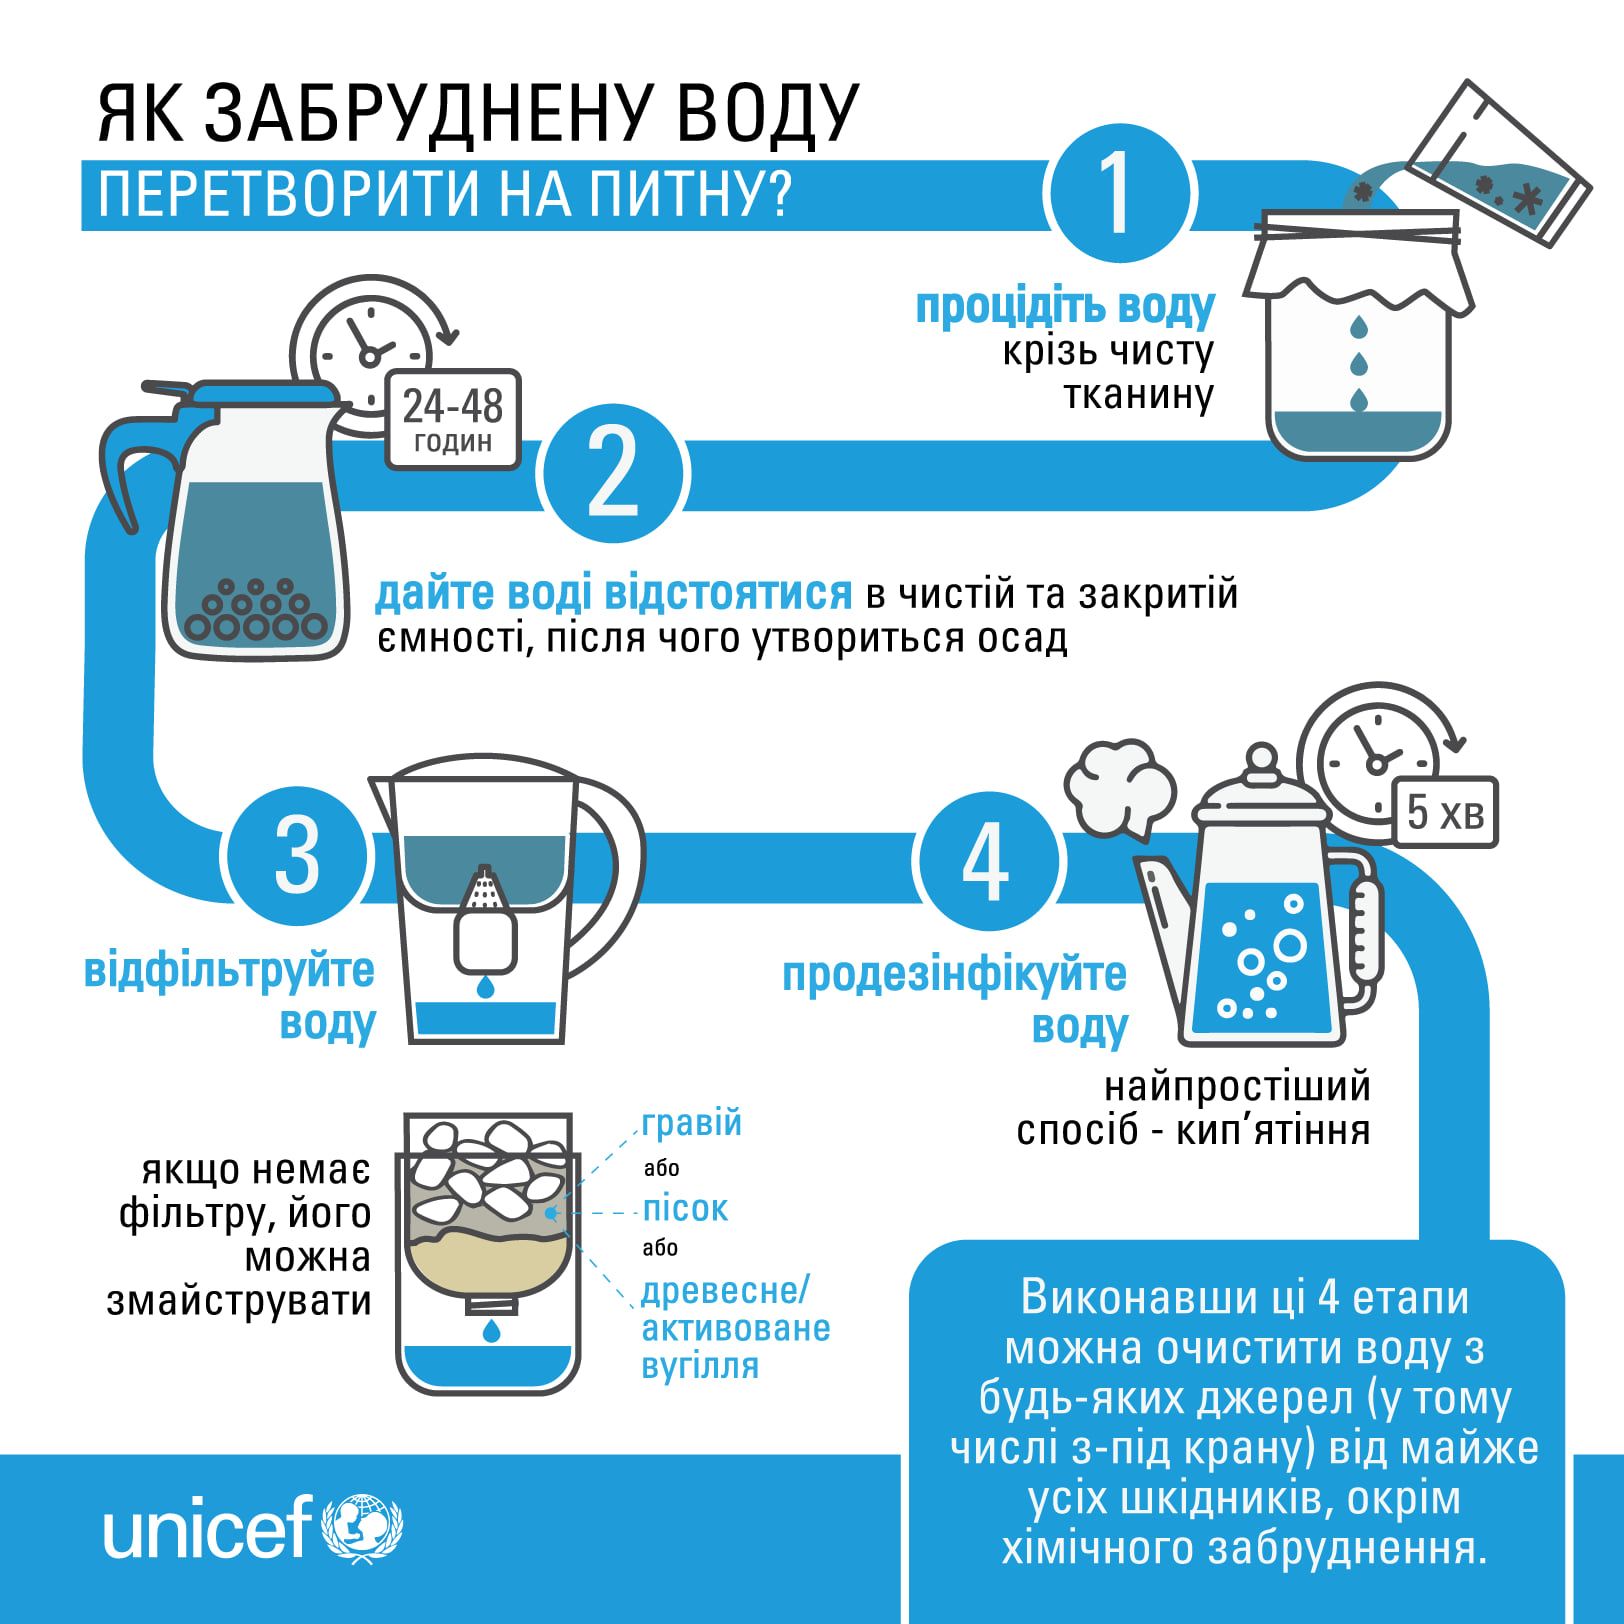 facebook.com/UNICEFUkraine